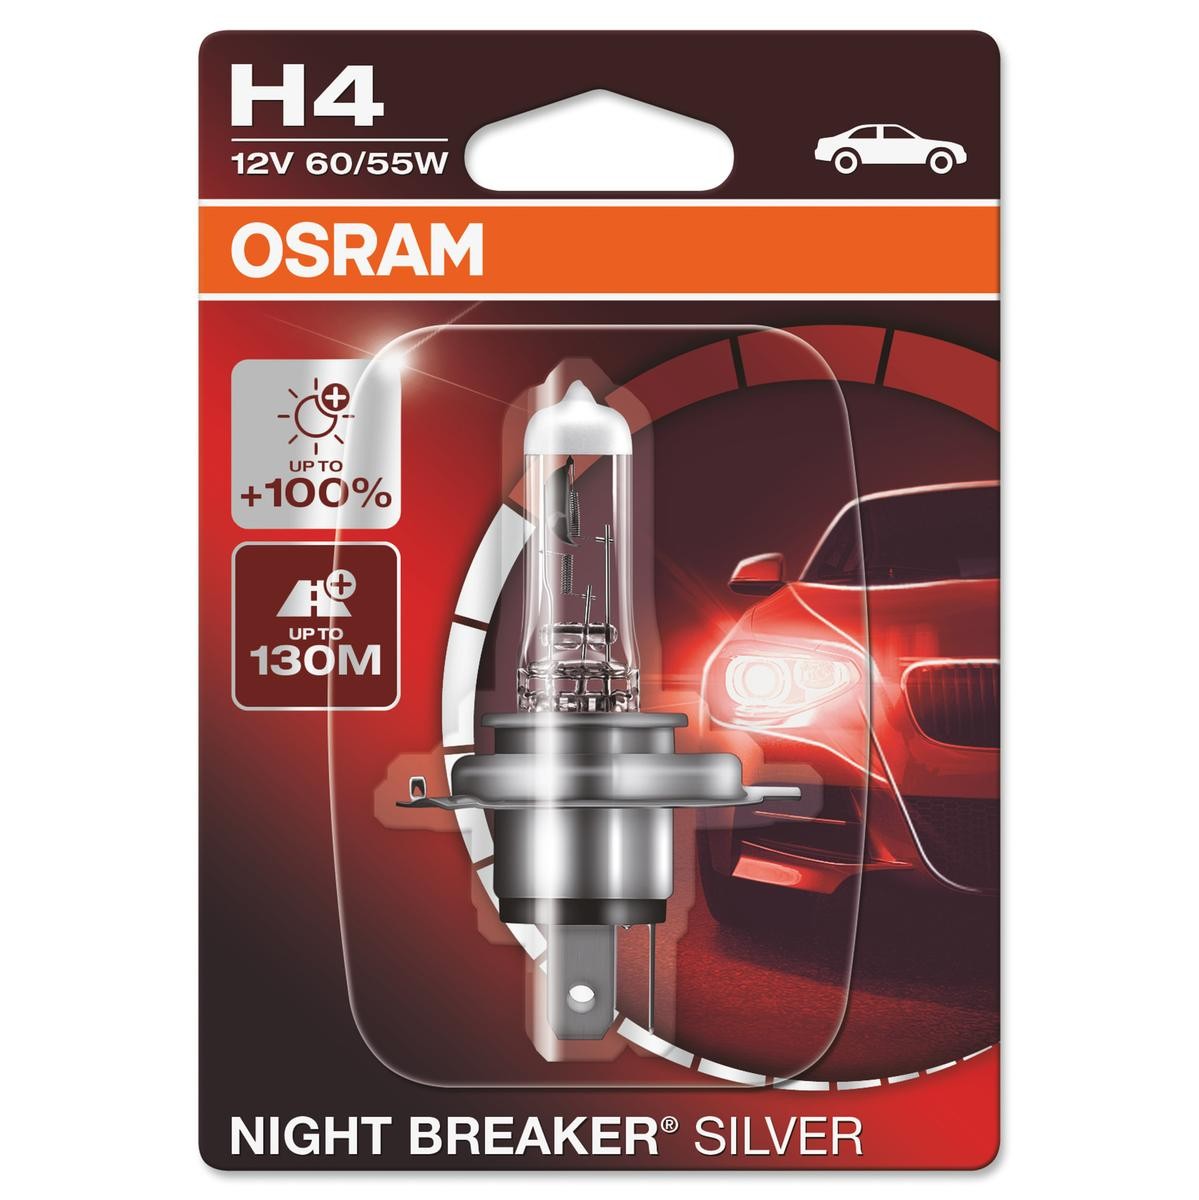 64193NBS-01B OSRAM NIGHT BREAKER SILVER H4 12V 60/55W Halogen